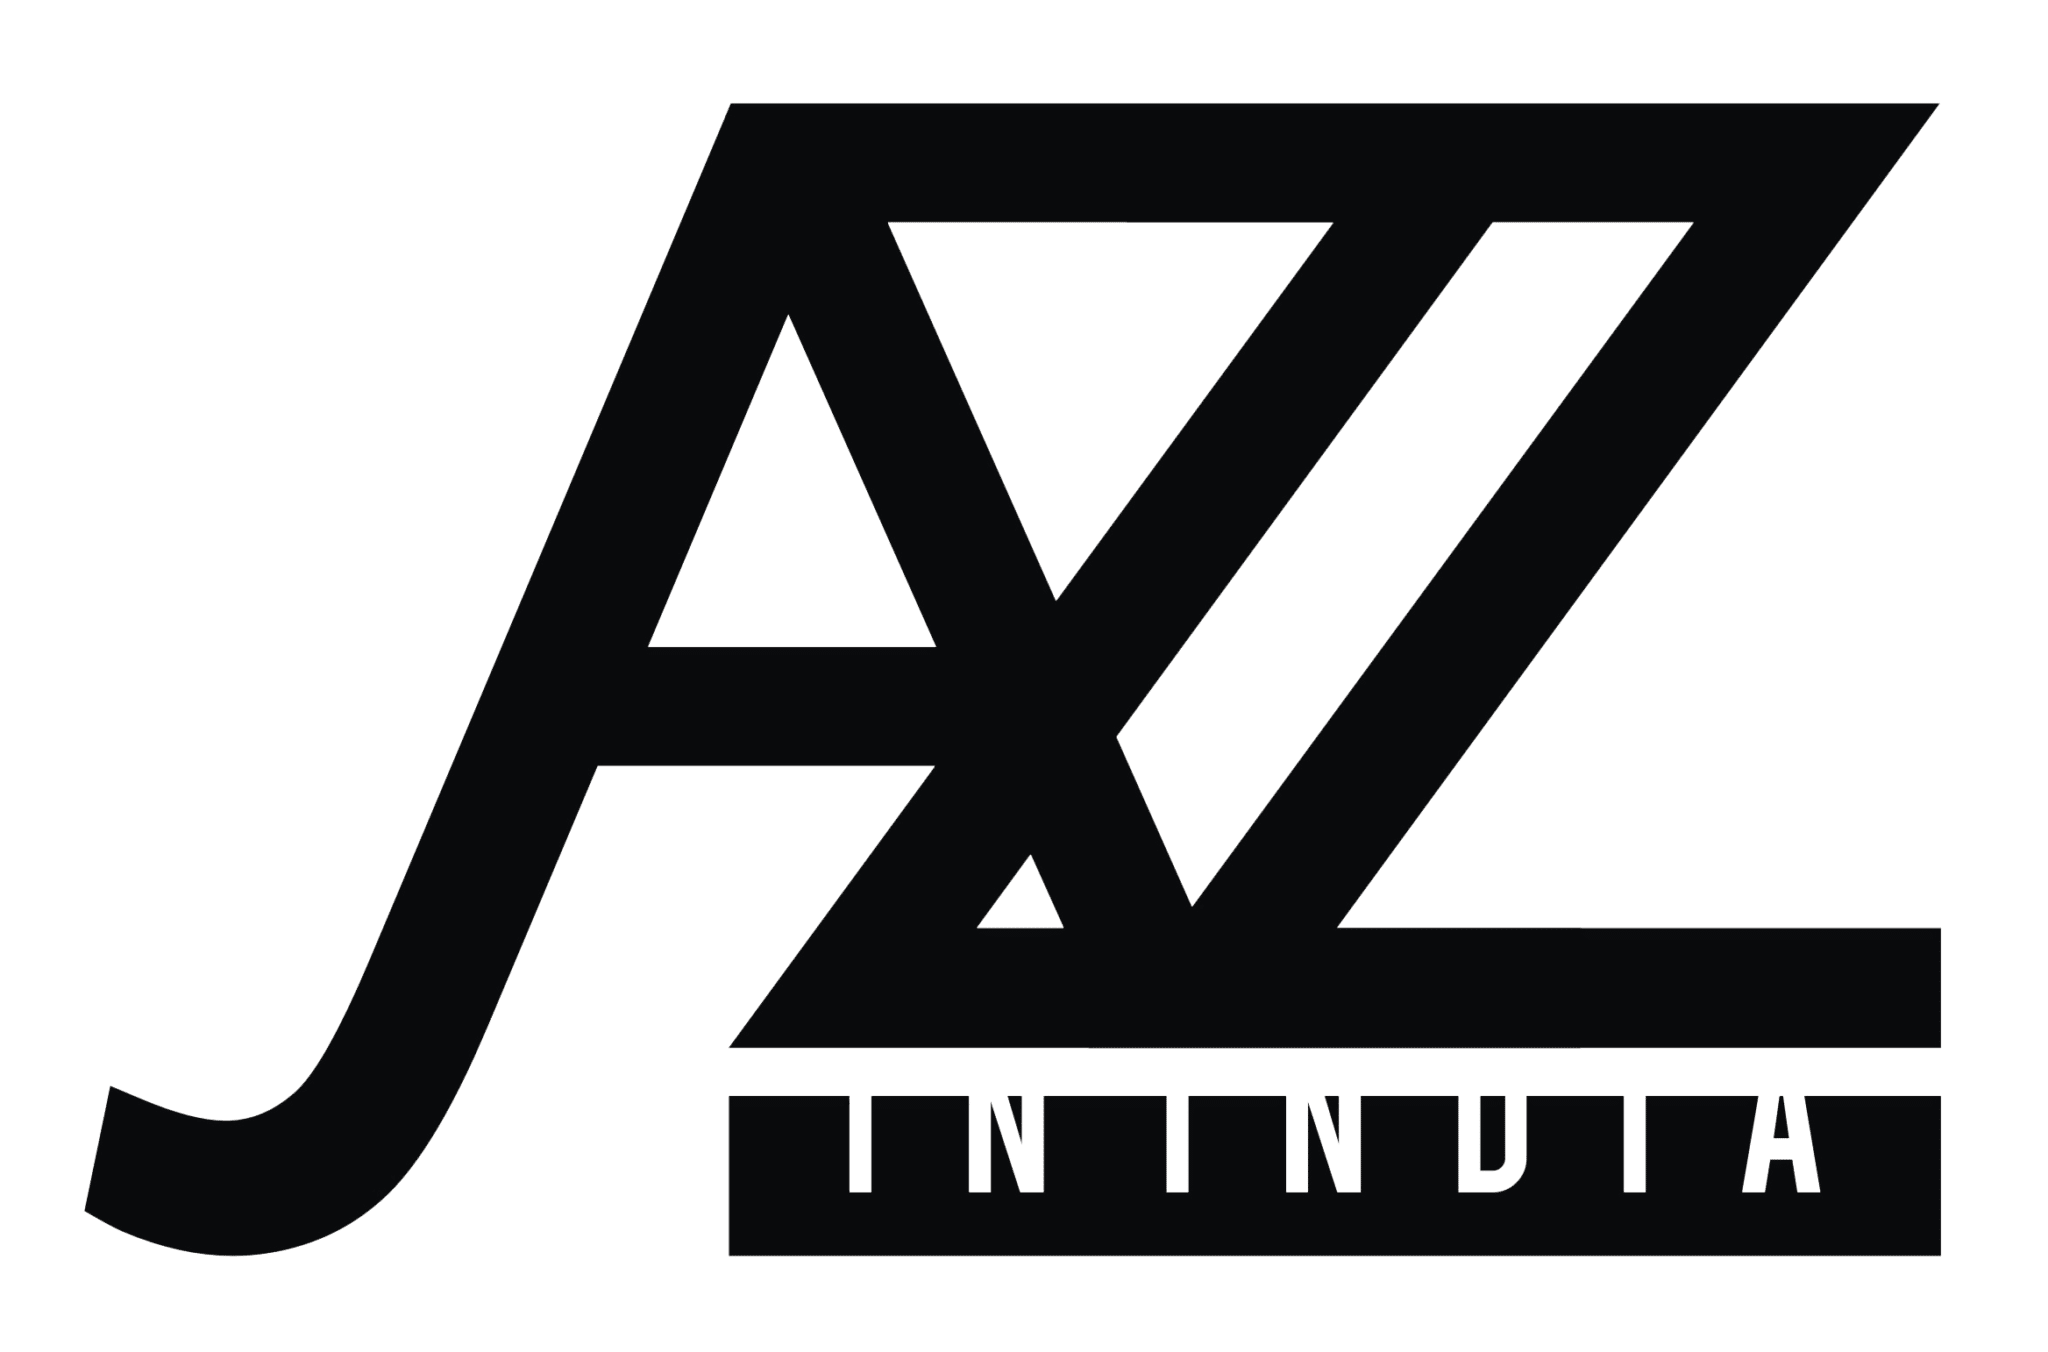 Jazz in India logo